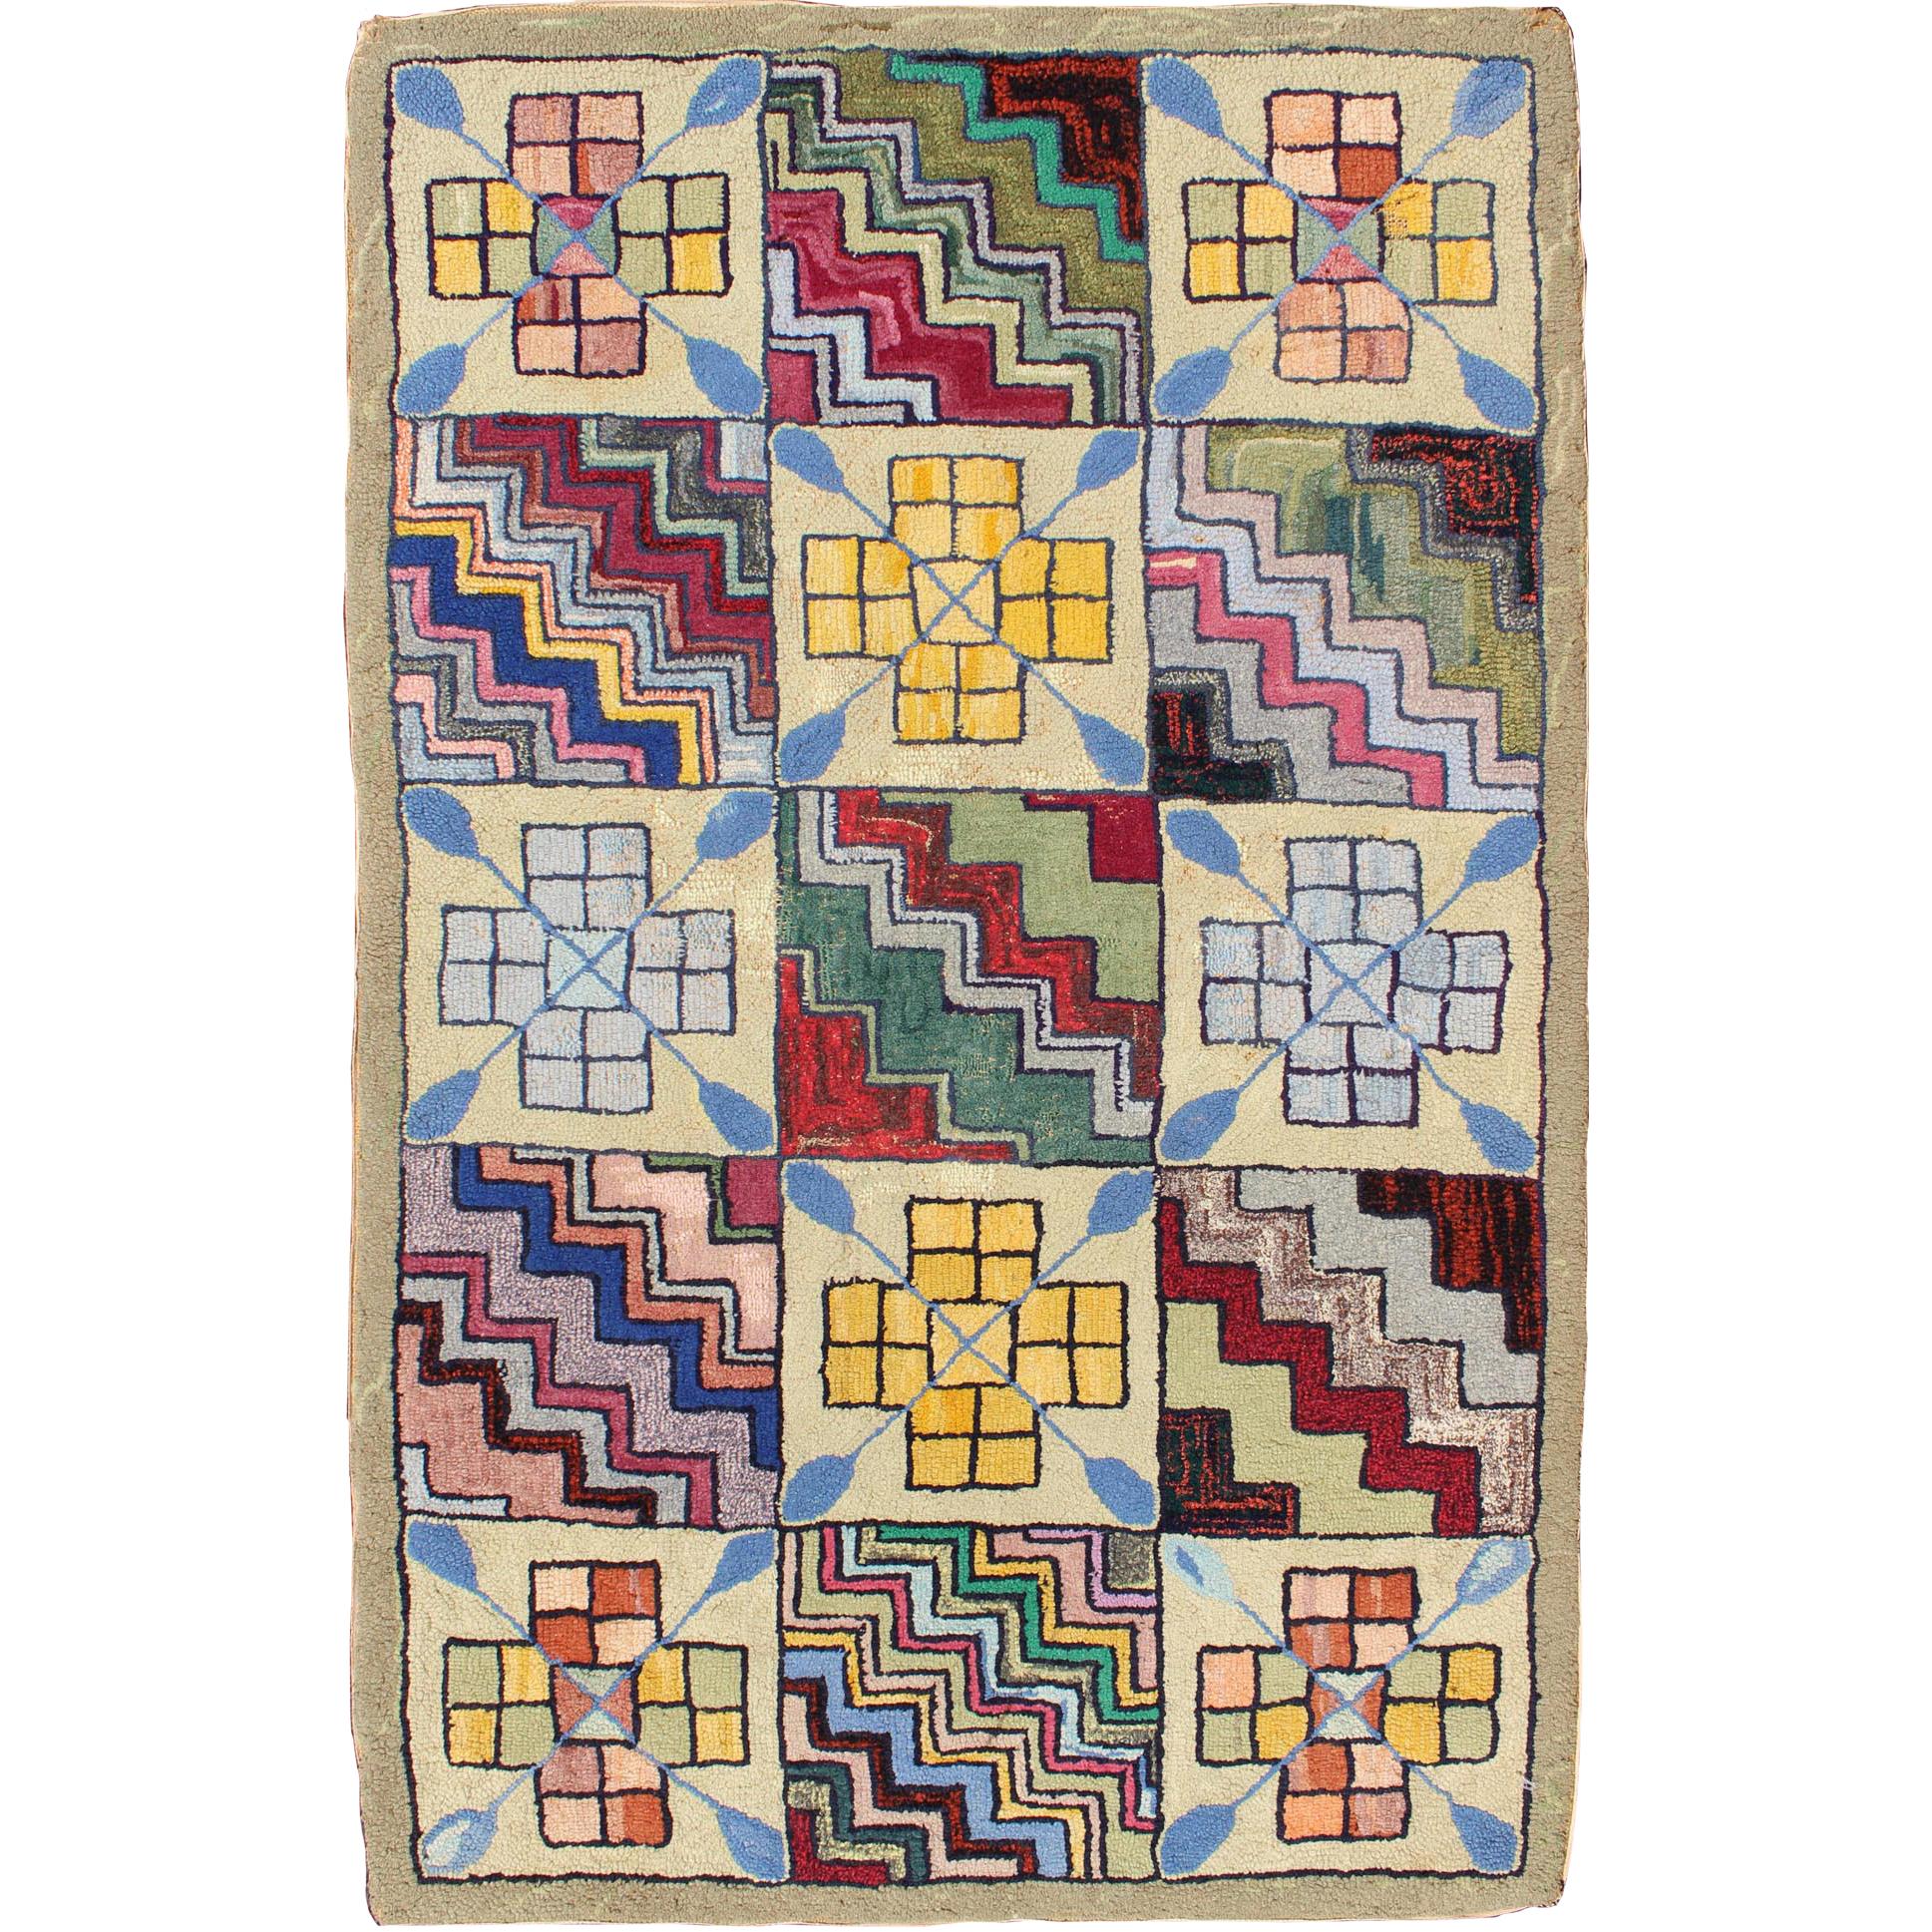 Rainbow Checkerboard Vintage American Hooked Rug with Geometric Cross Designs